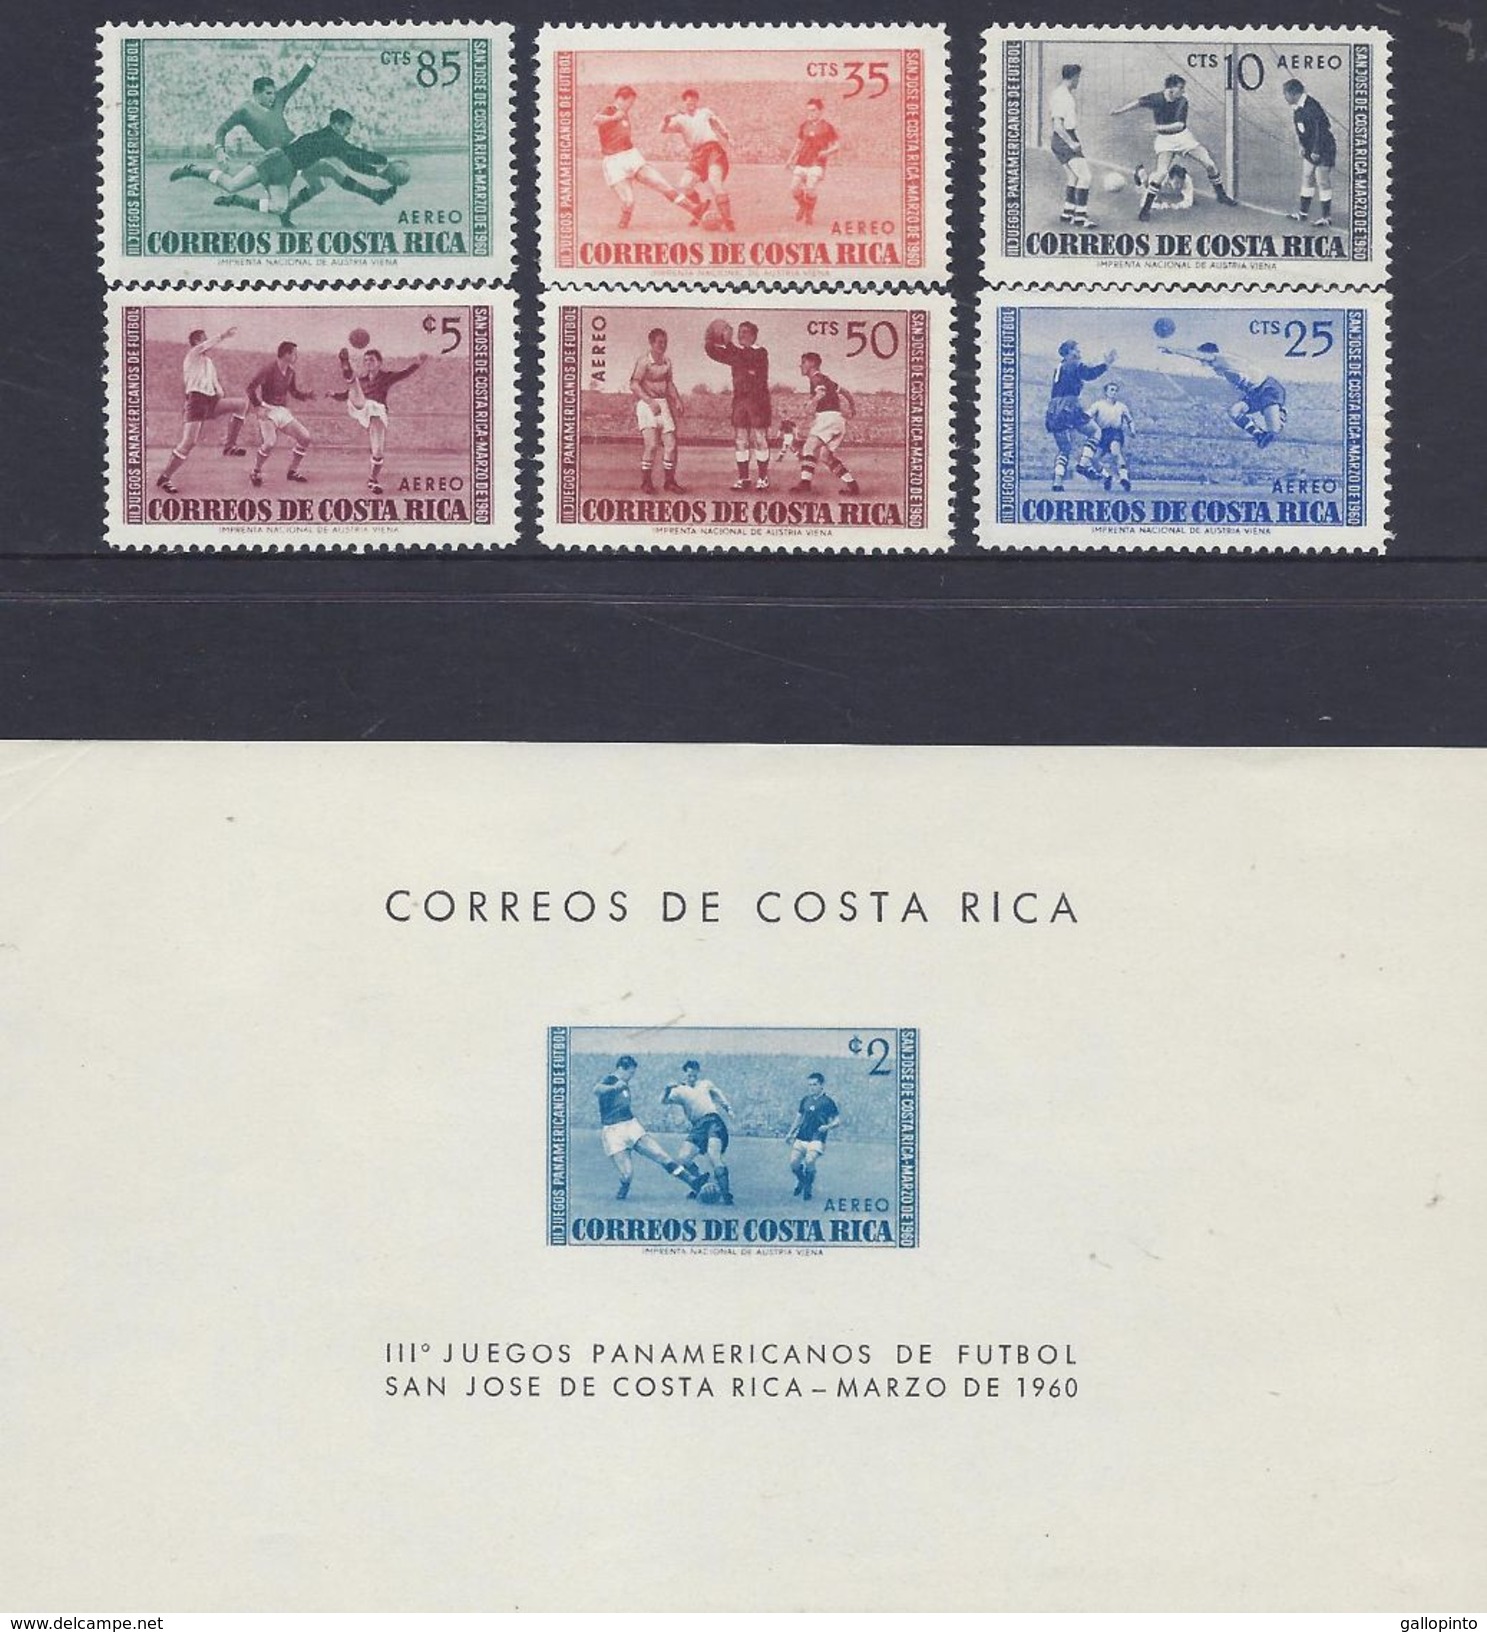 COSTA RICA PAN-AMERICAN SOCCER GAMES, SAN JOSE Sc C283-C289 MLH 1960 - Soccer American Cup